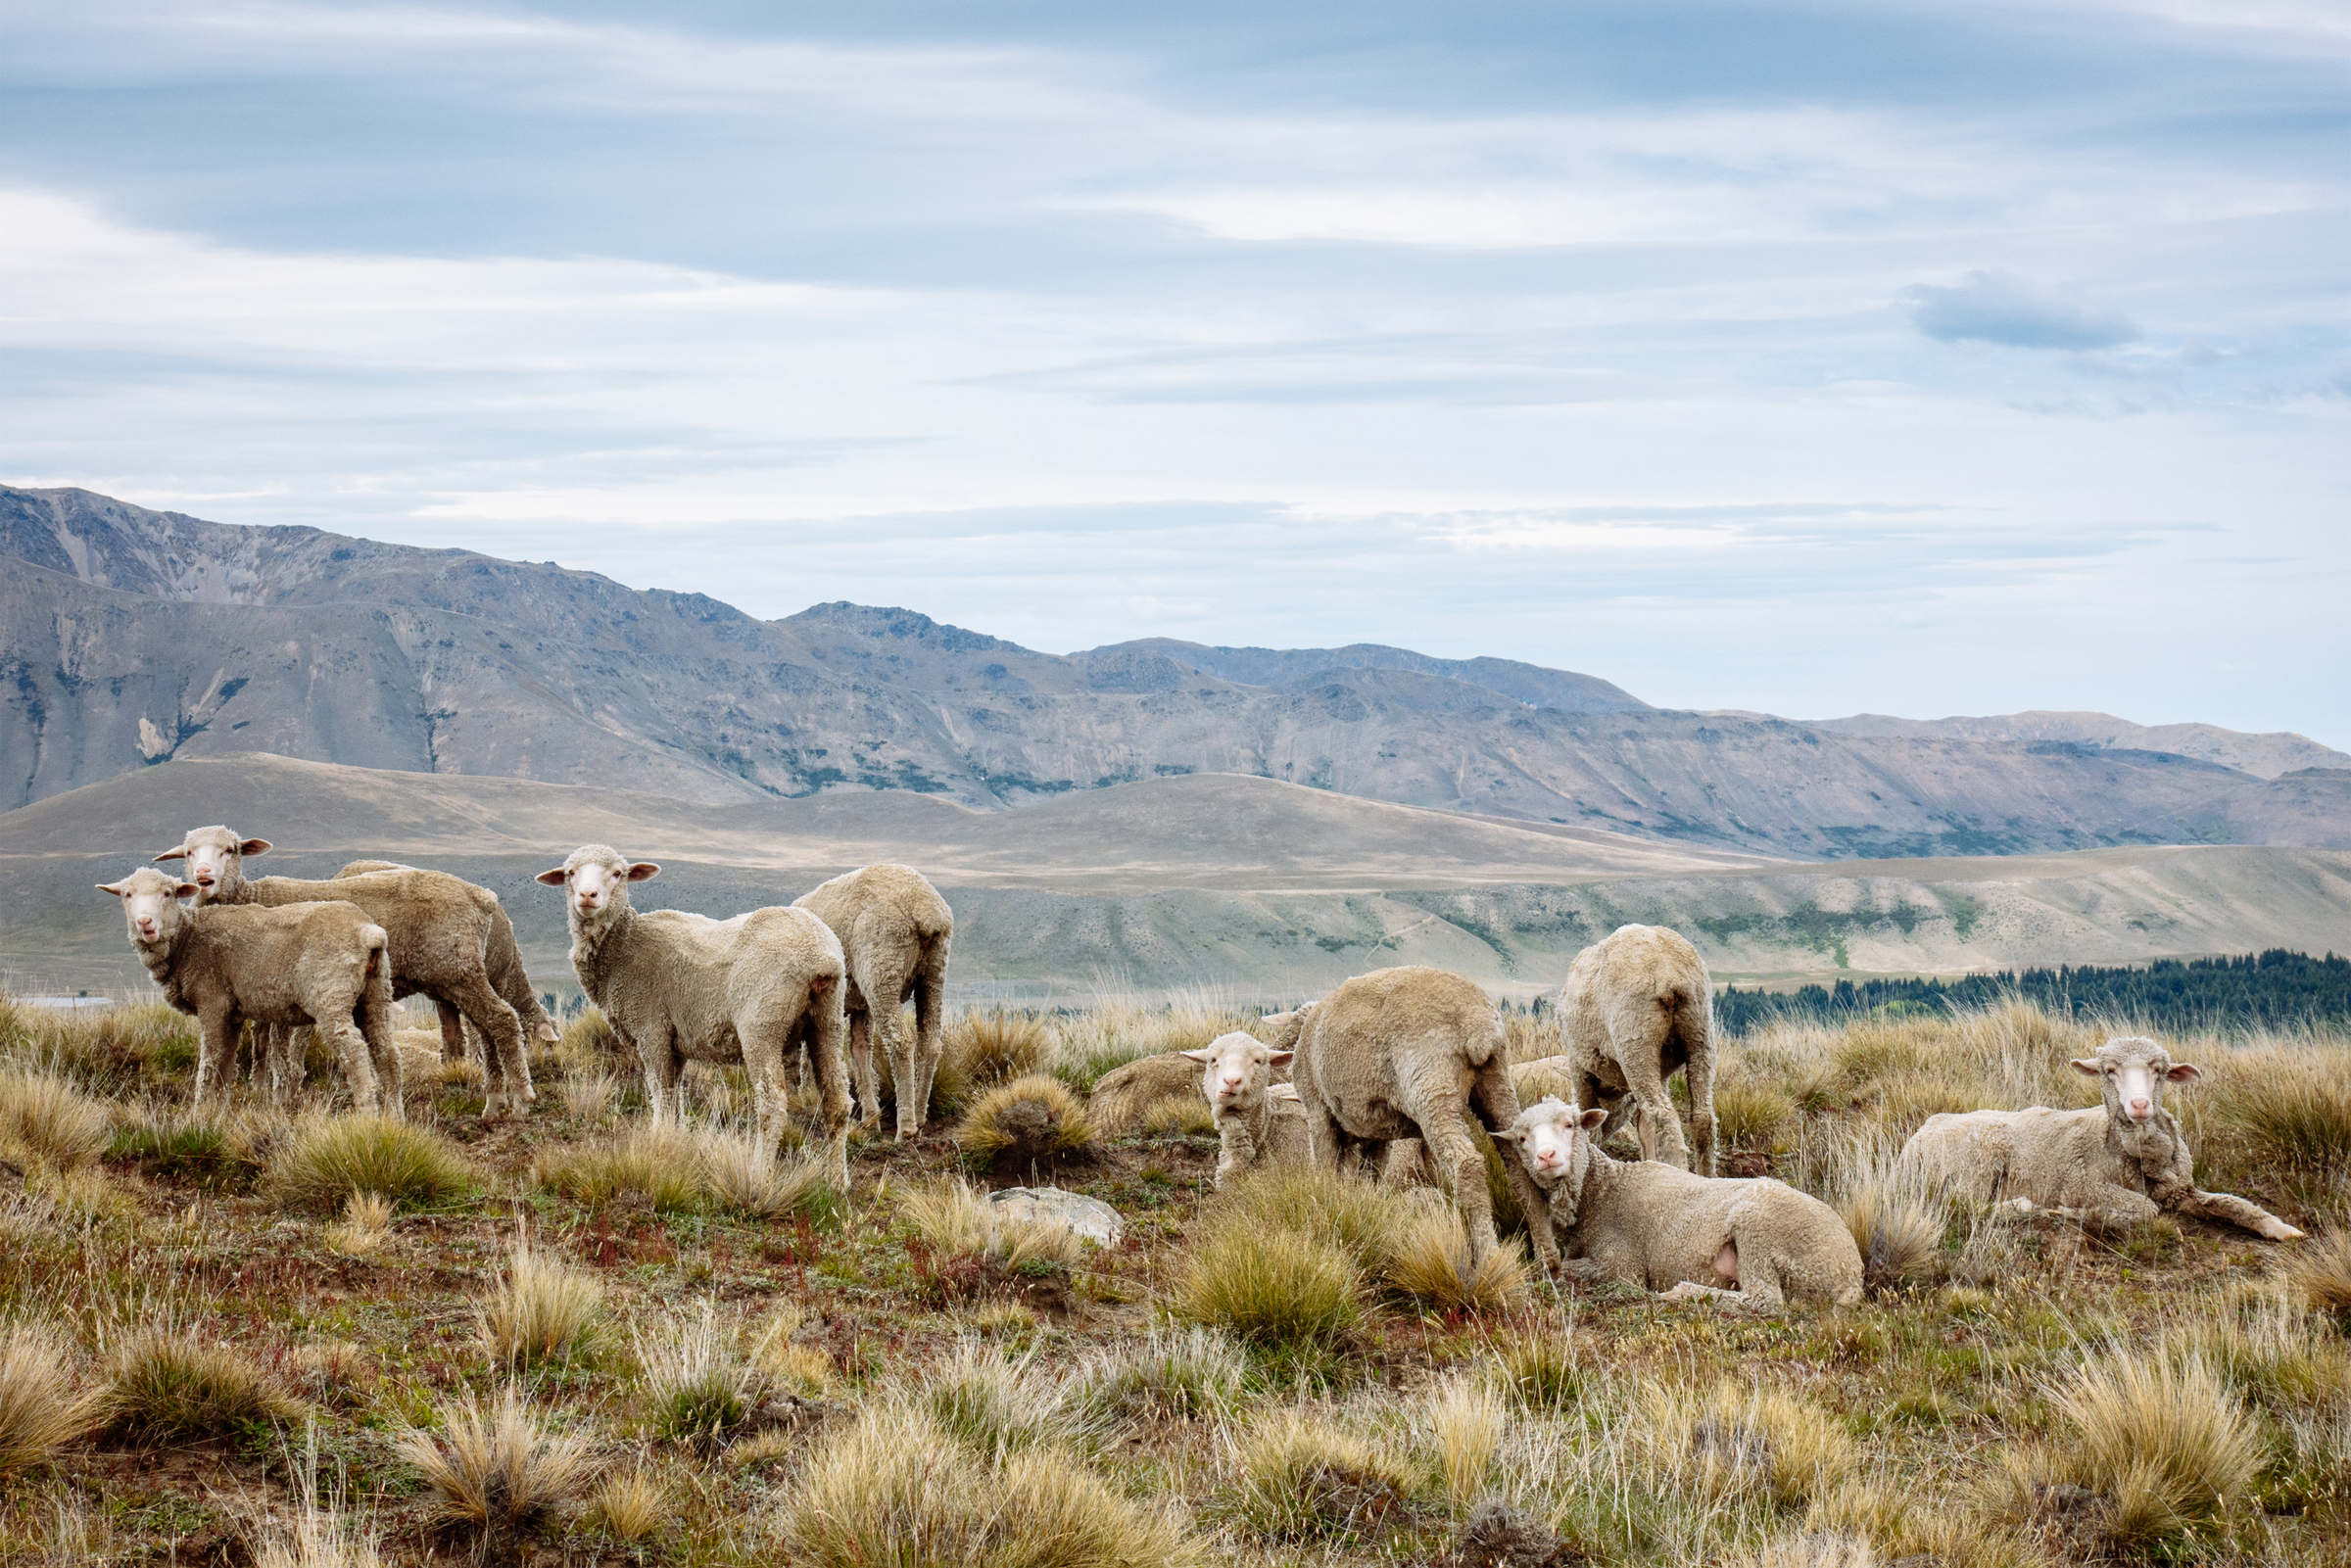 Sheep grazing on a mountainside.